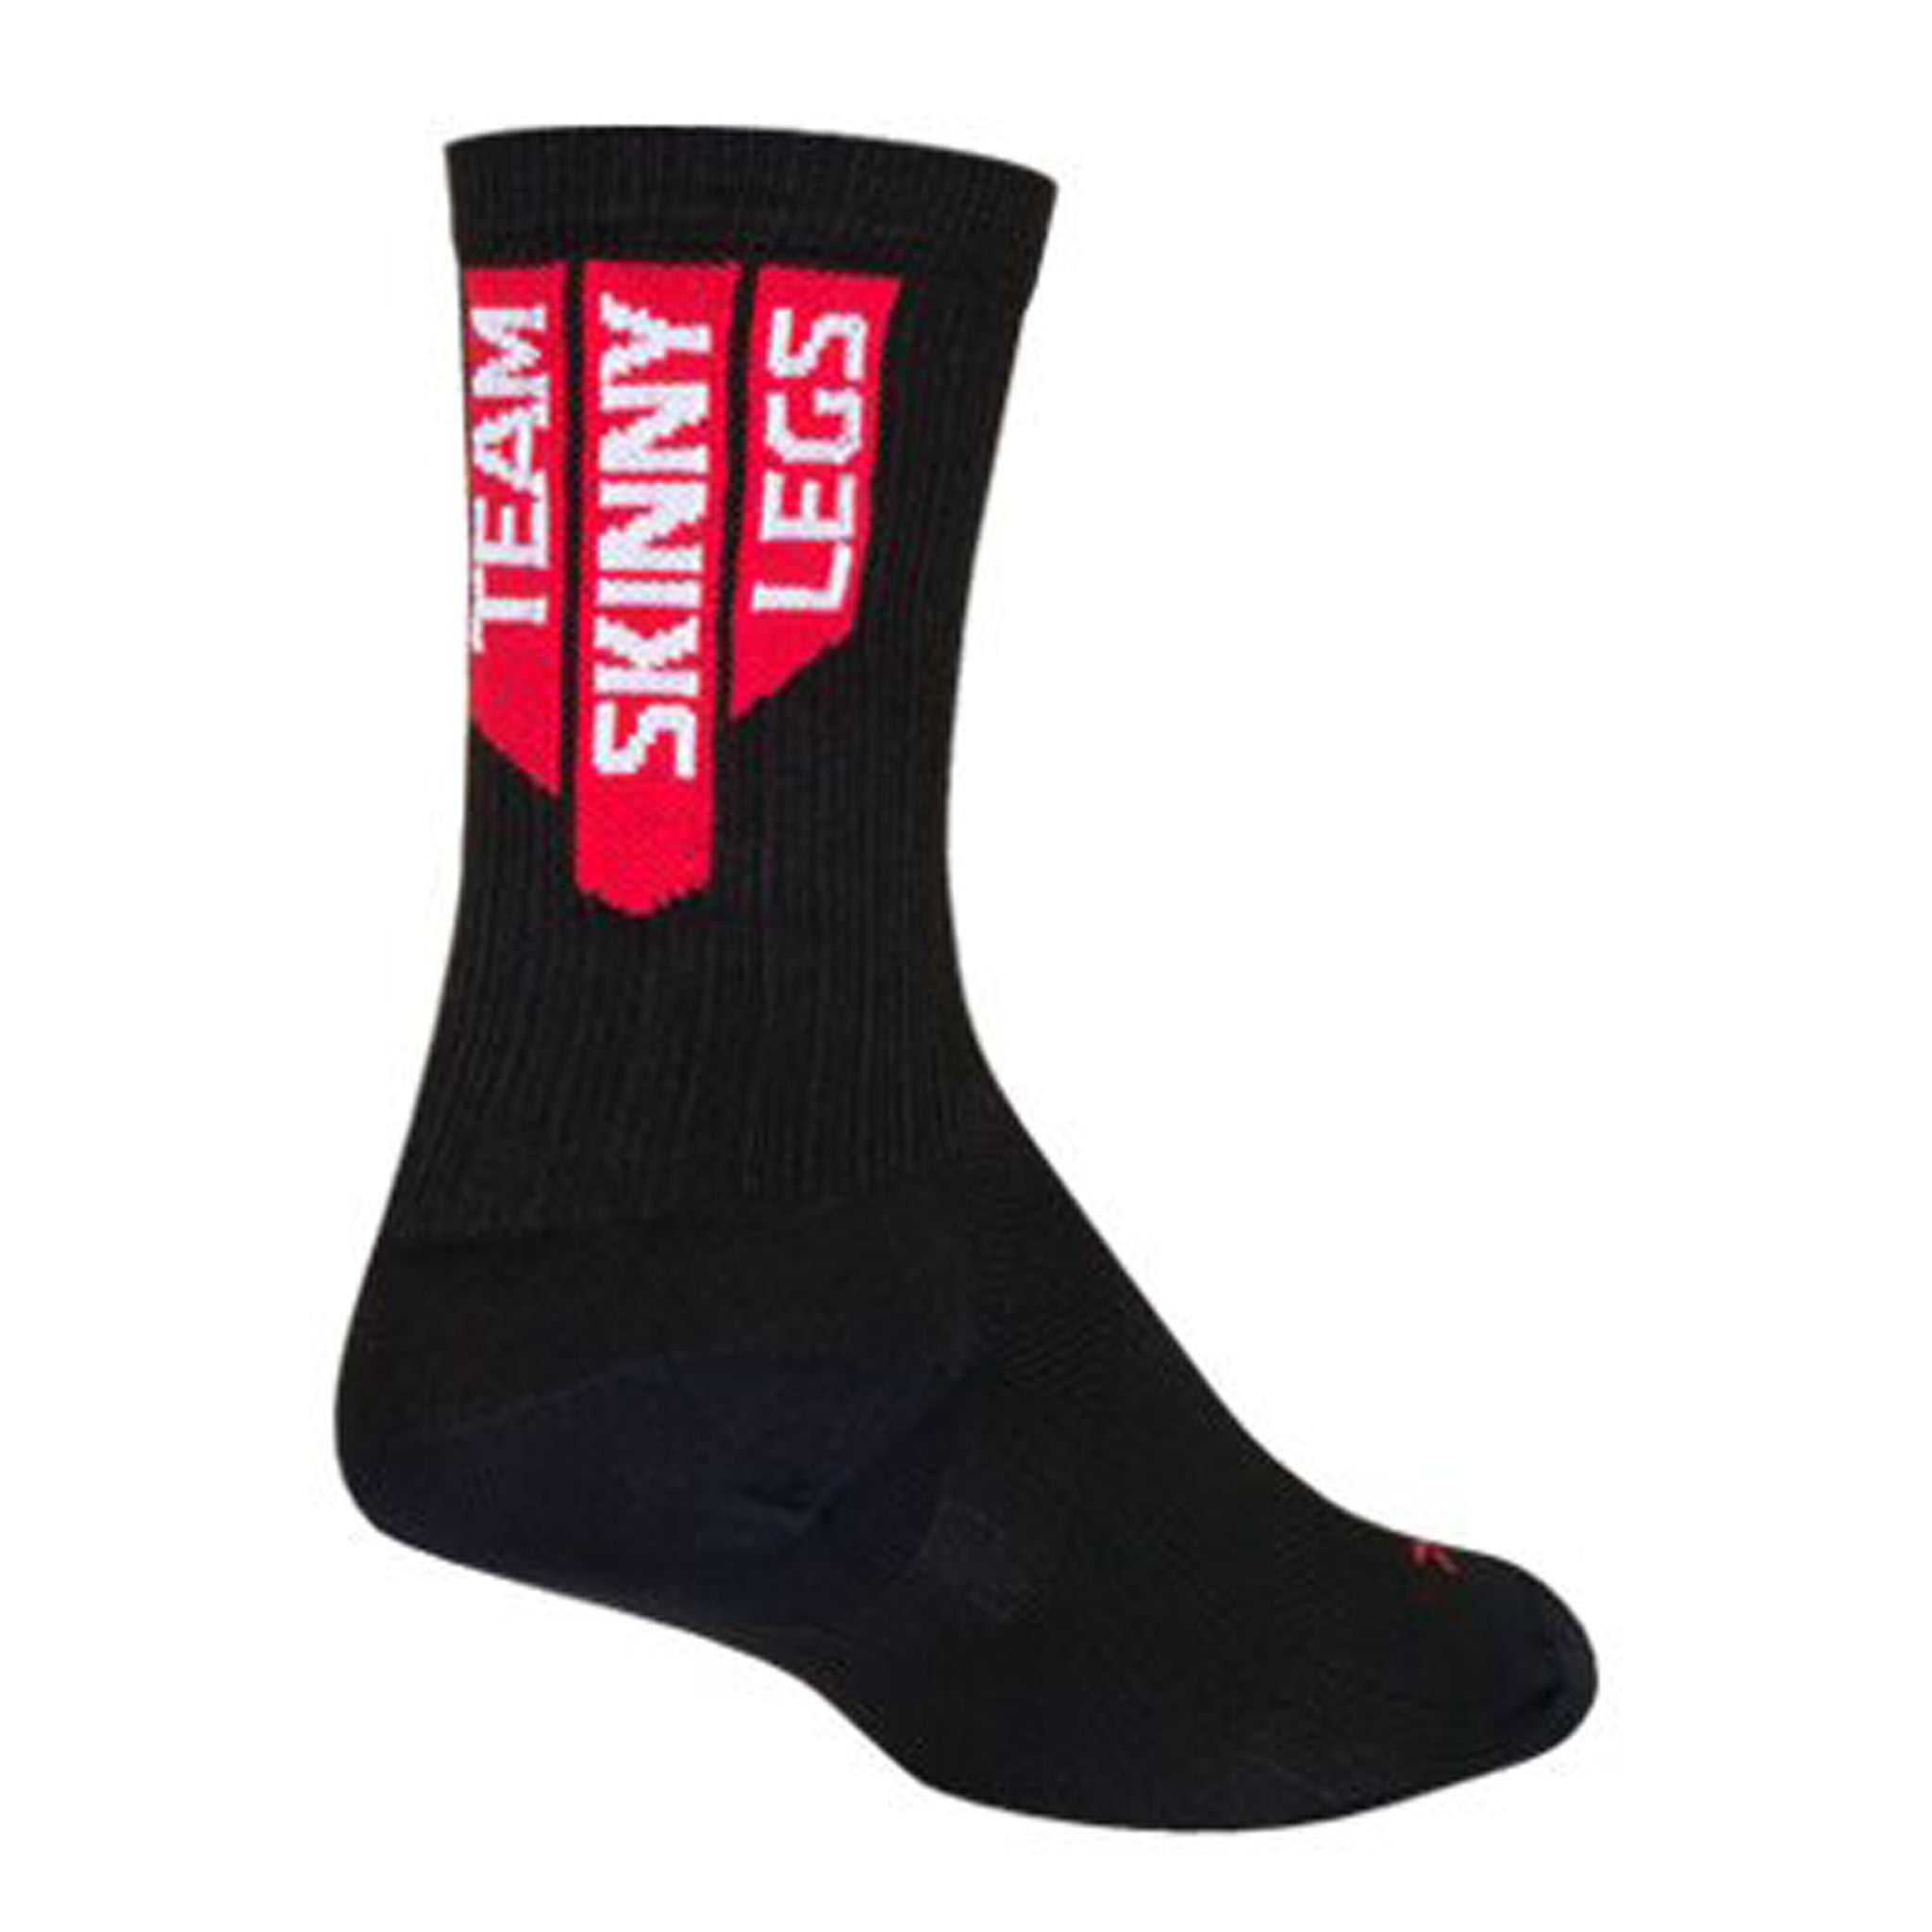 Sockguy Team Skinny Legs SGX6 Socks 5-9 Black